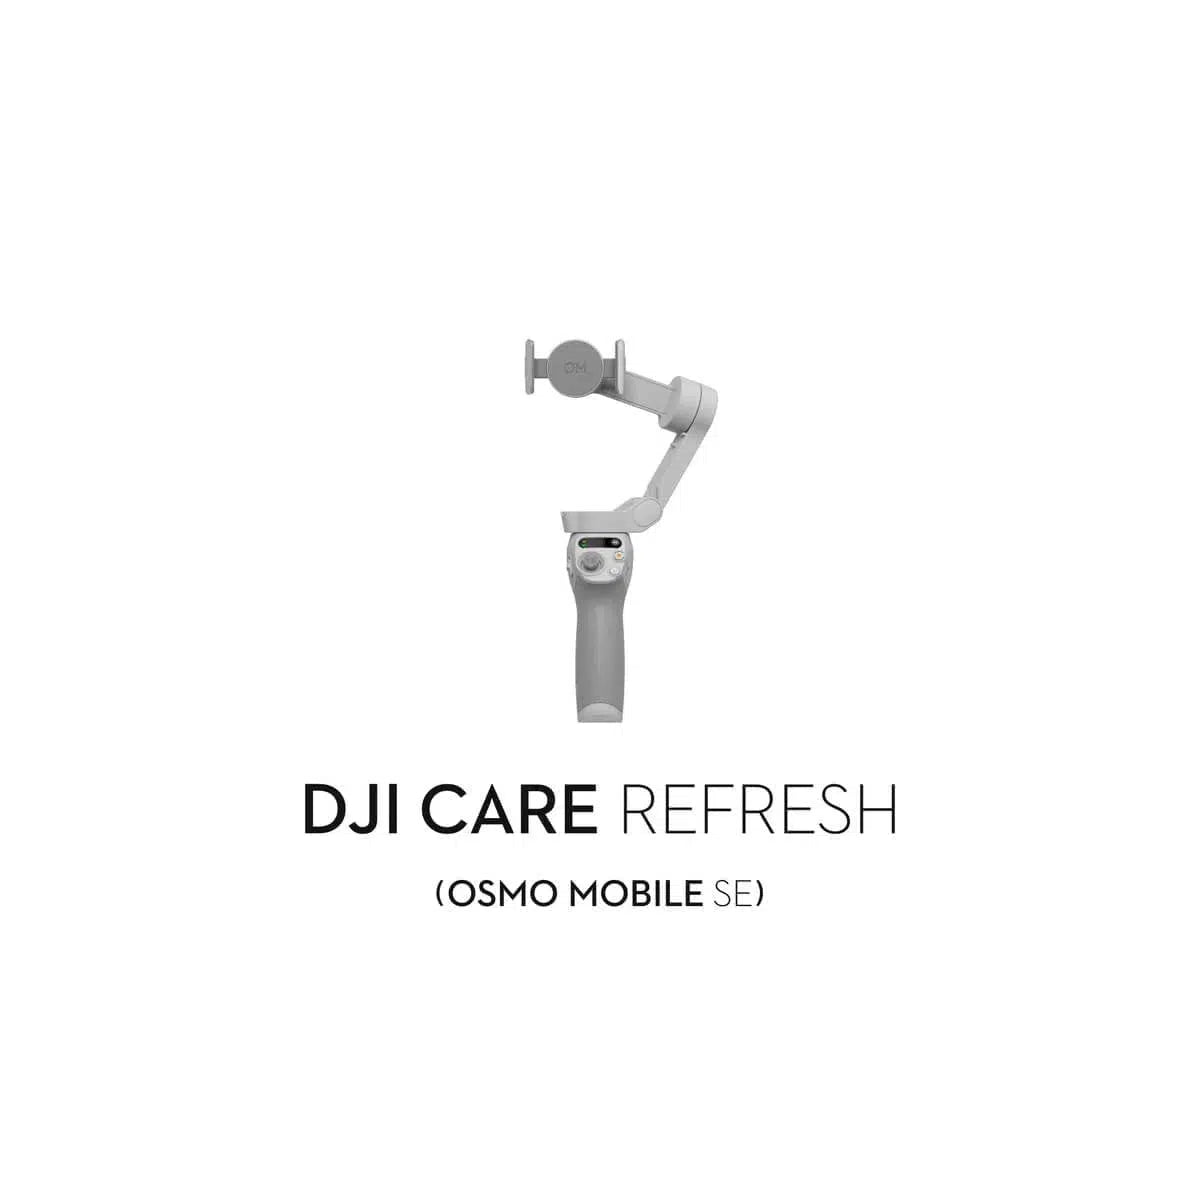 DJI Care Refresh 1-Year Plan (Osmo Mobile SE)